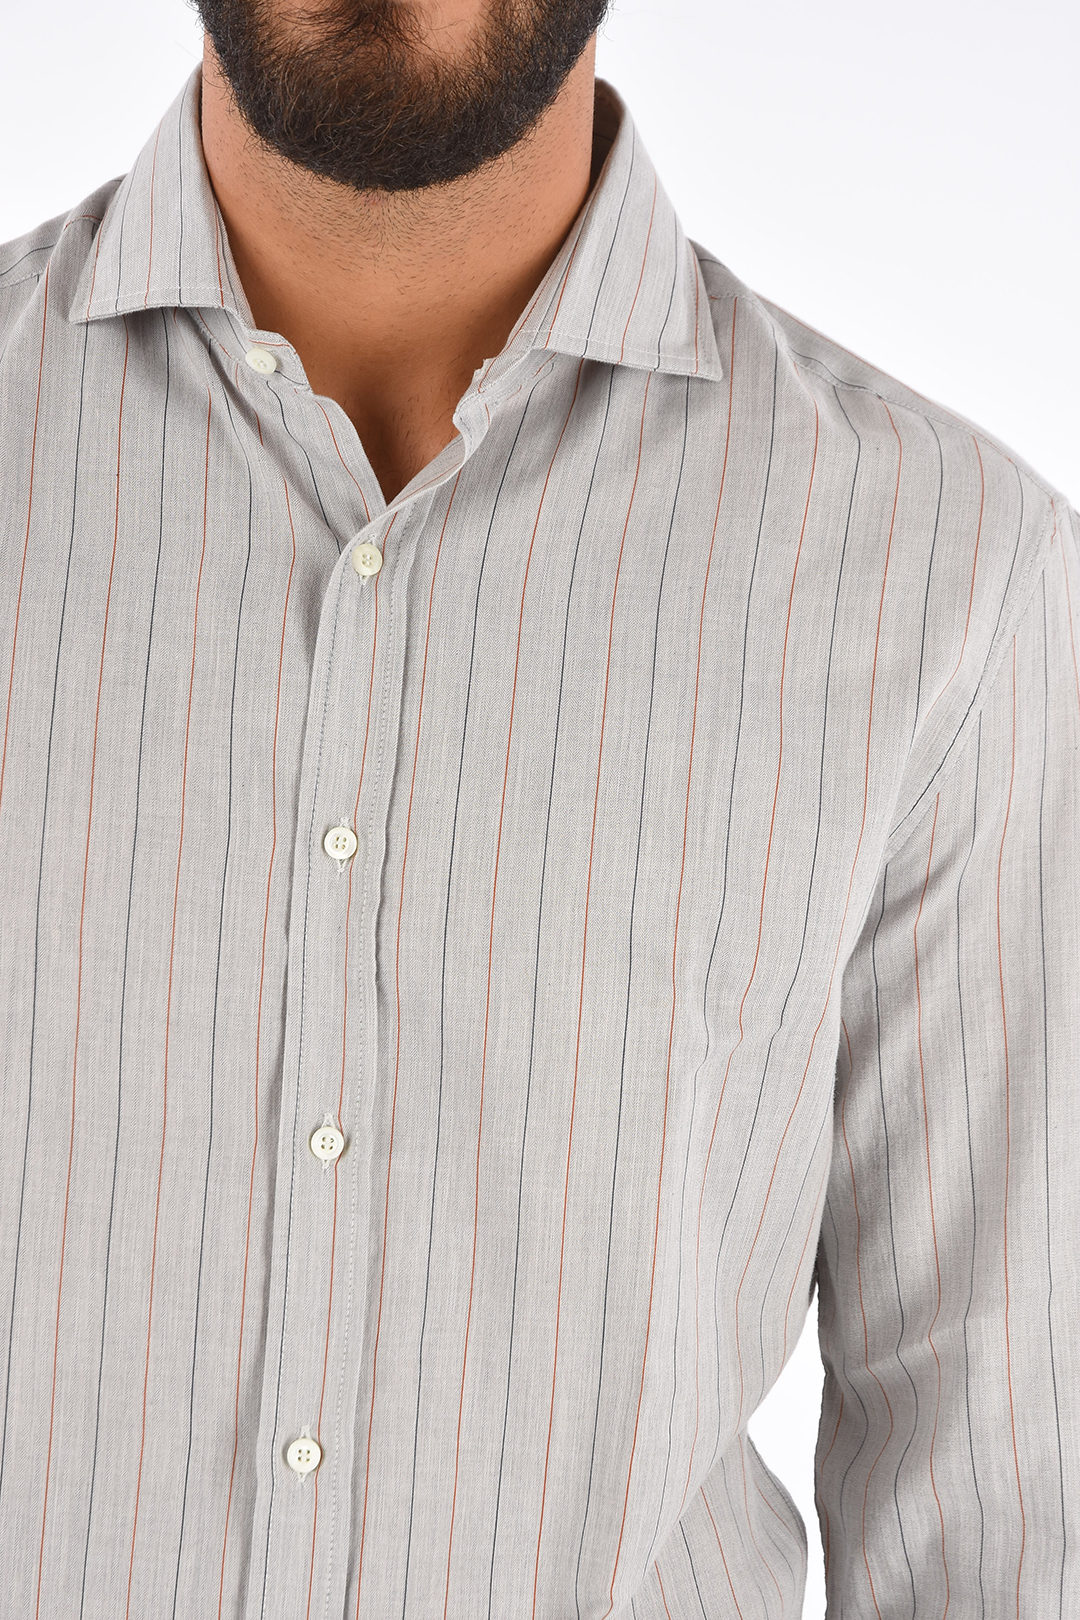 Striped Slim Fit Classic Collar Shirt